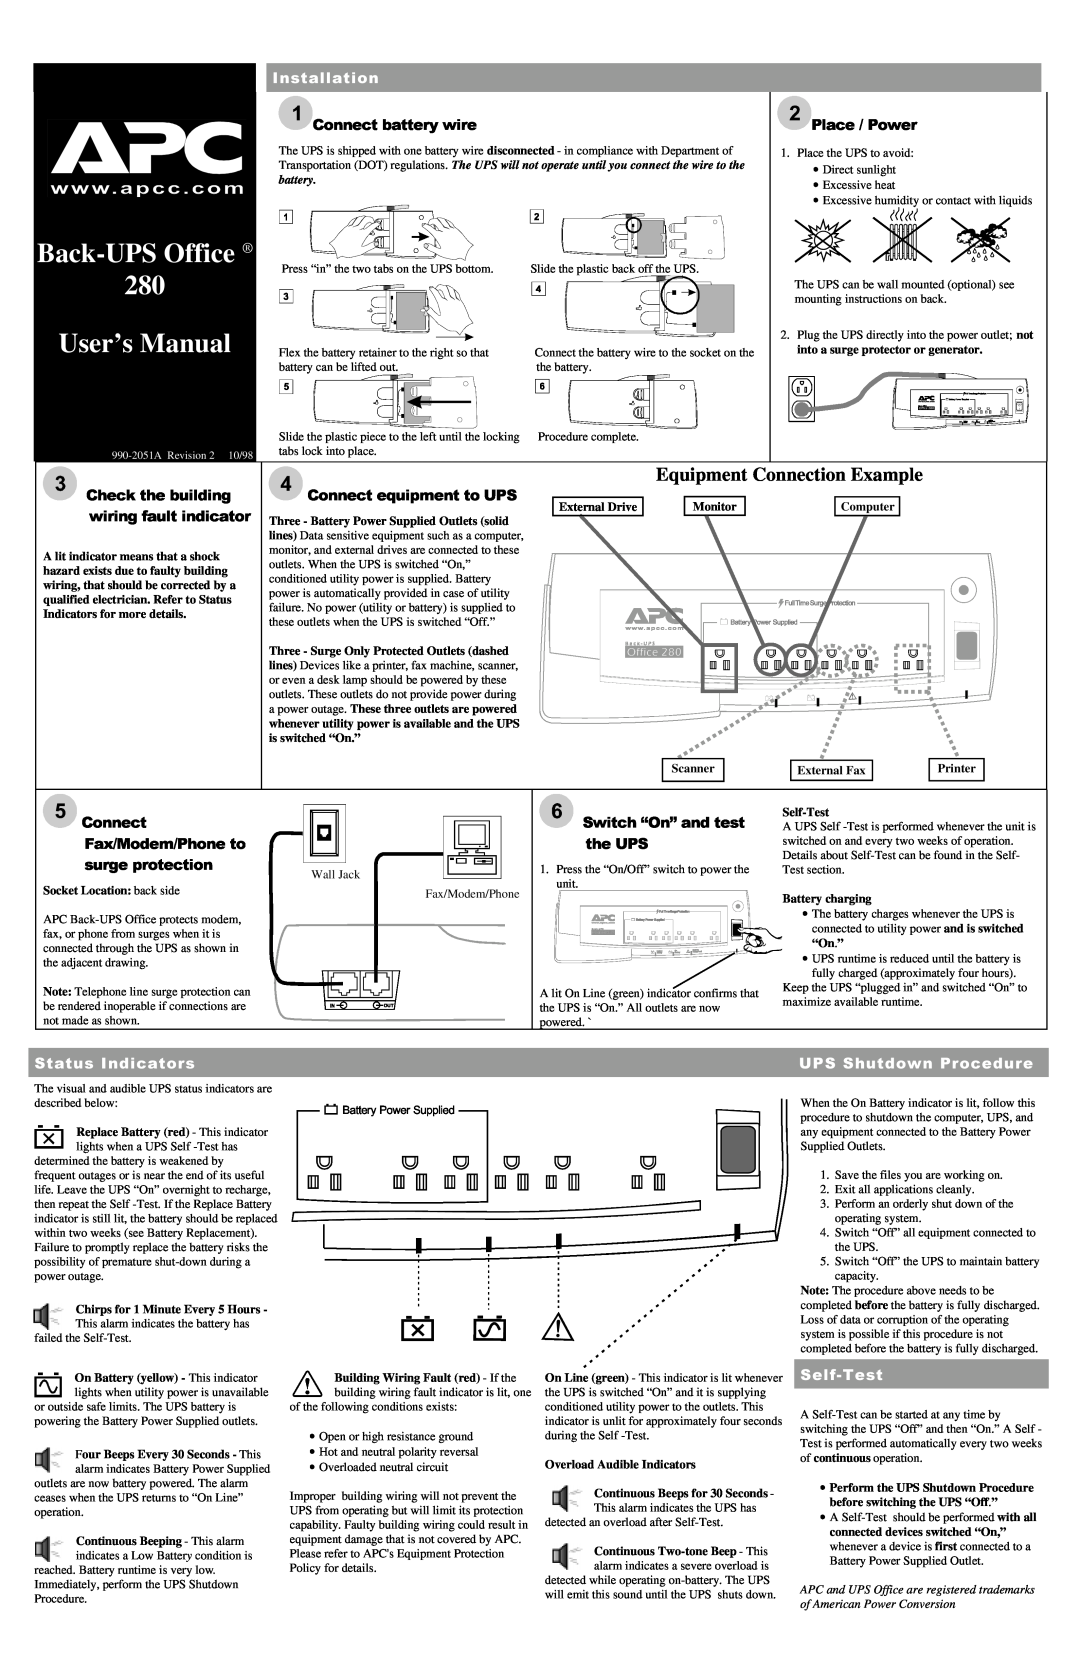 American Power Conversion 280 user manual Back-UPS Office, User’s Manual, Equipment Connection Example, Rqqhfwedwwhu\Zluh 